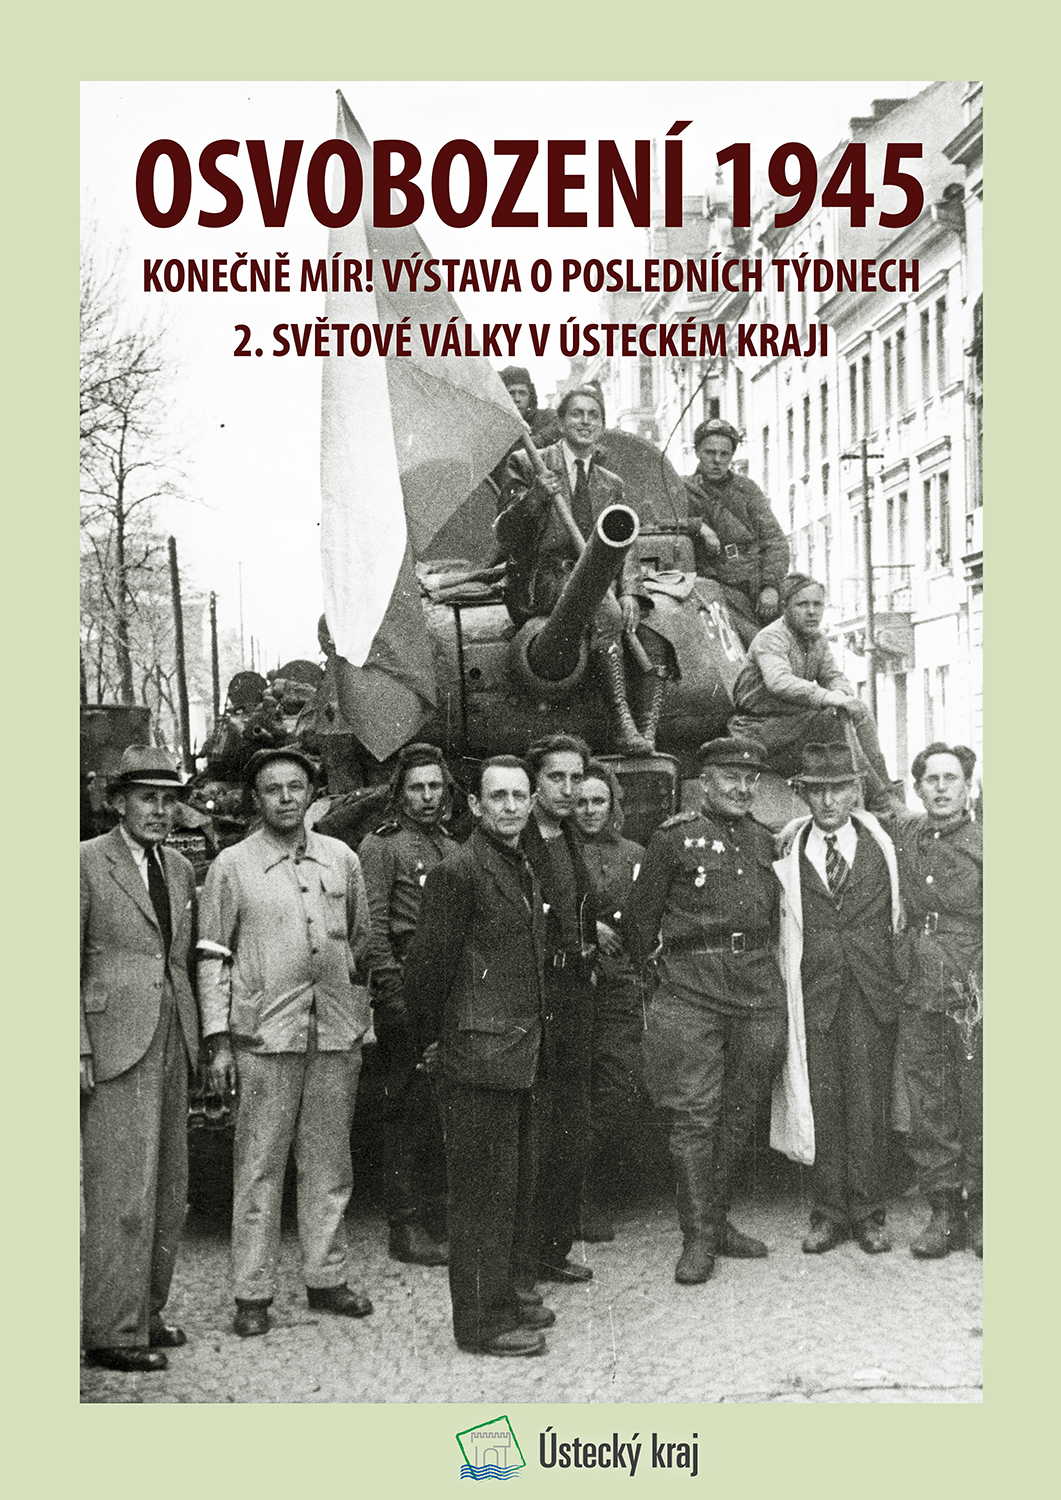 Osvobozeni1945-plakát